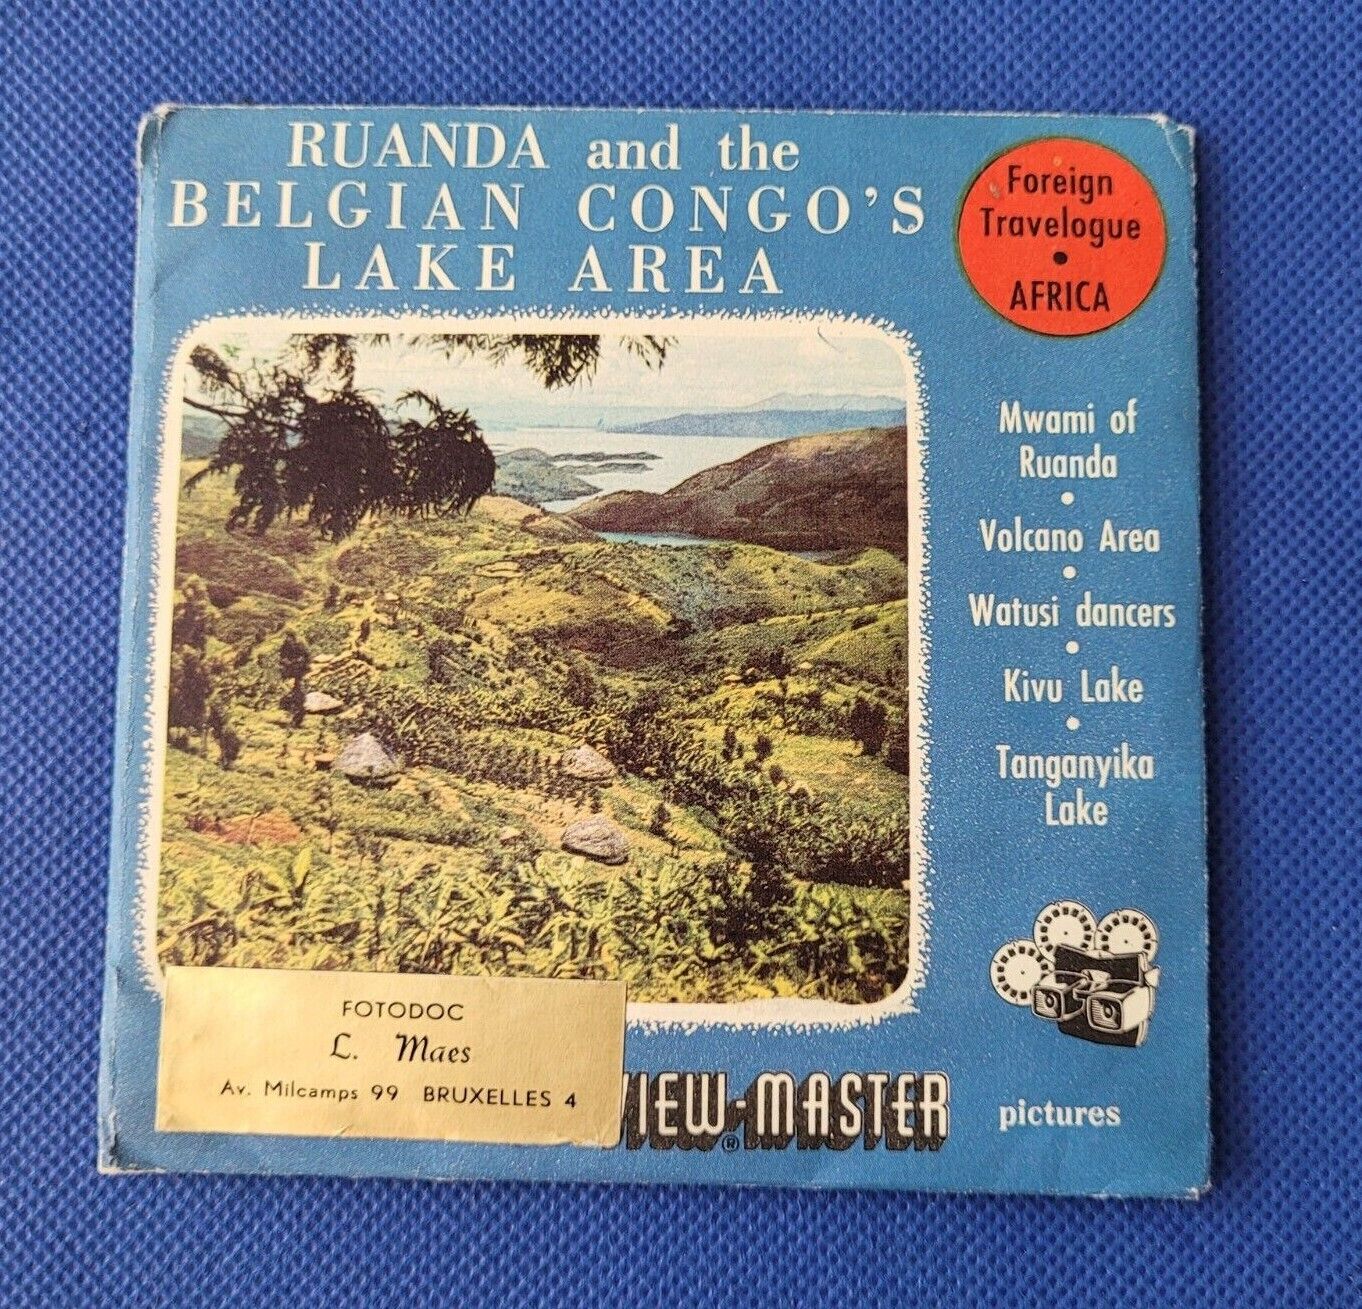 Ruanda & the Belgian Congo's Lake Area 3791, 3792, 3793 view-master Reels Packet